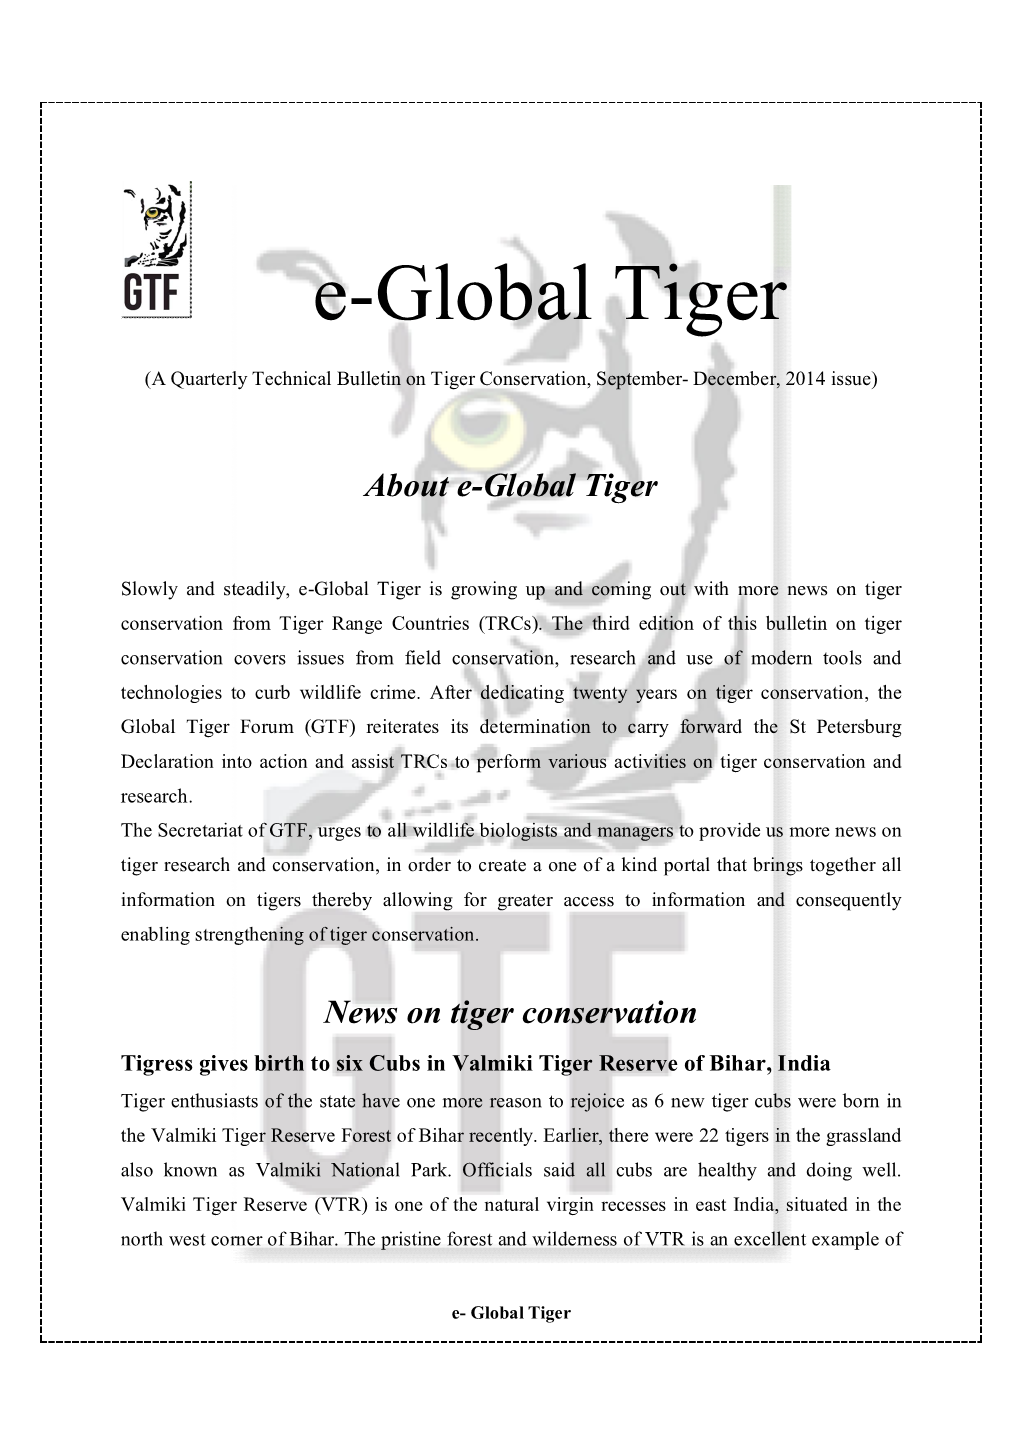 E-Global Tiger